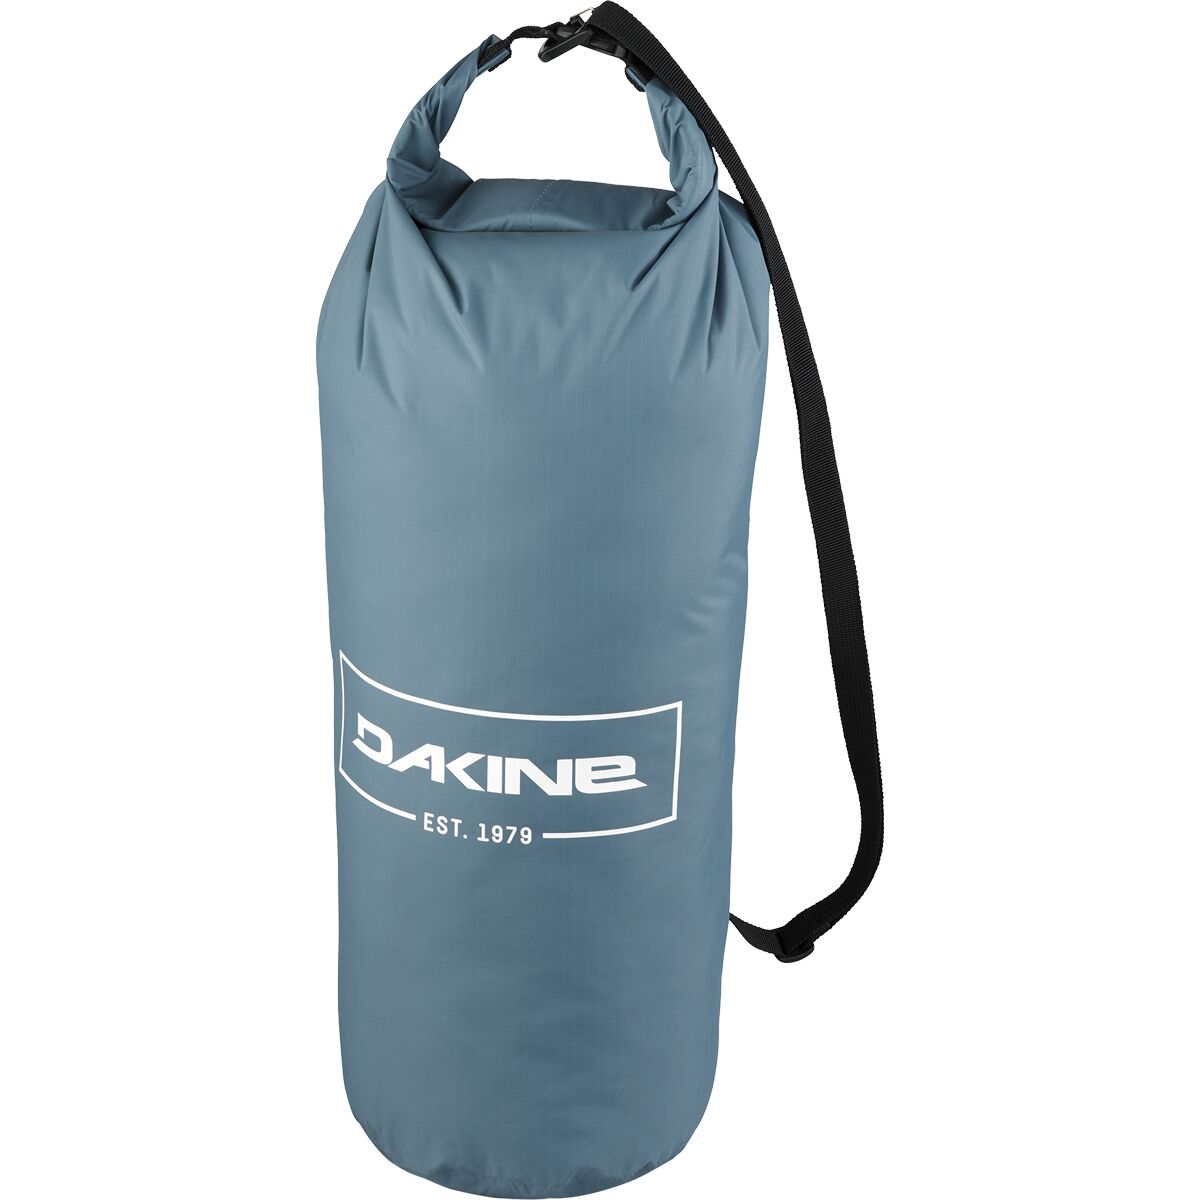 DAKINE Packable 20L Rolltop Dry Bag